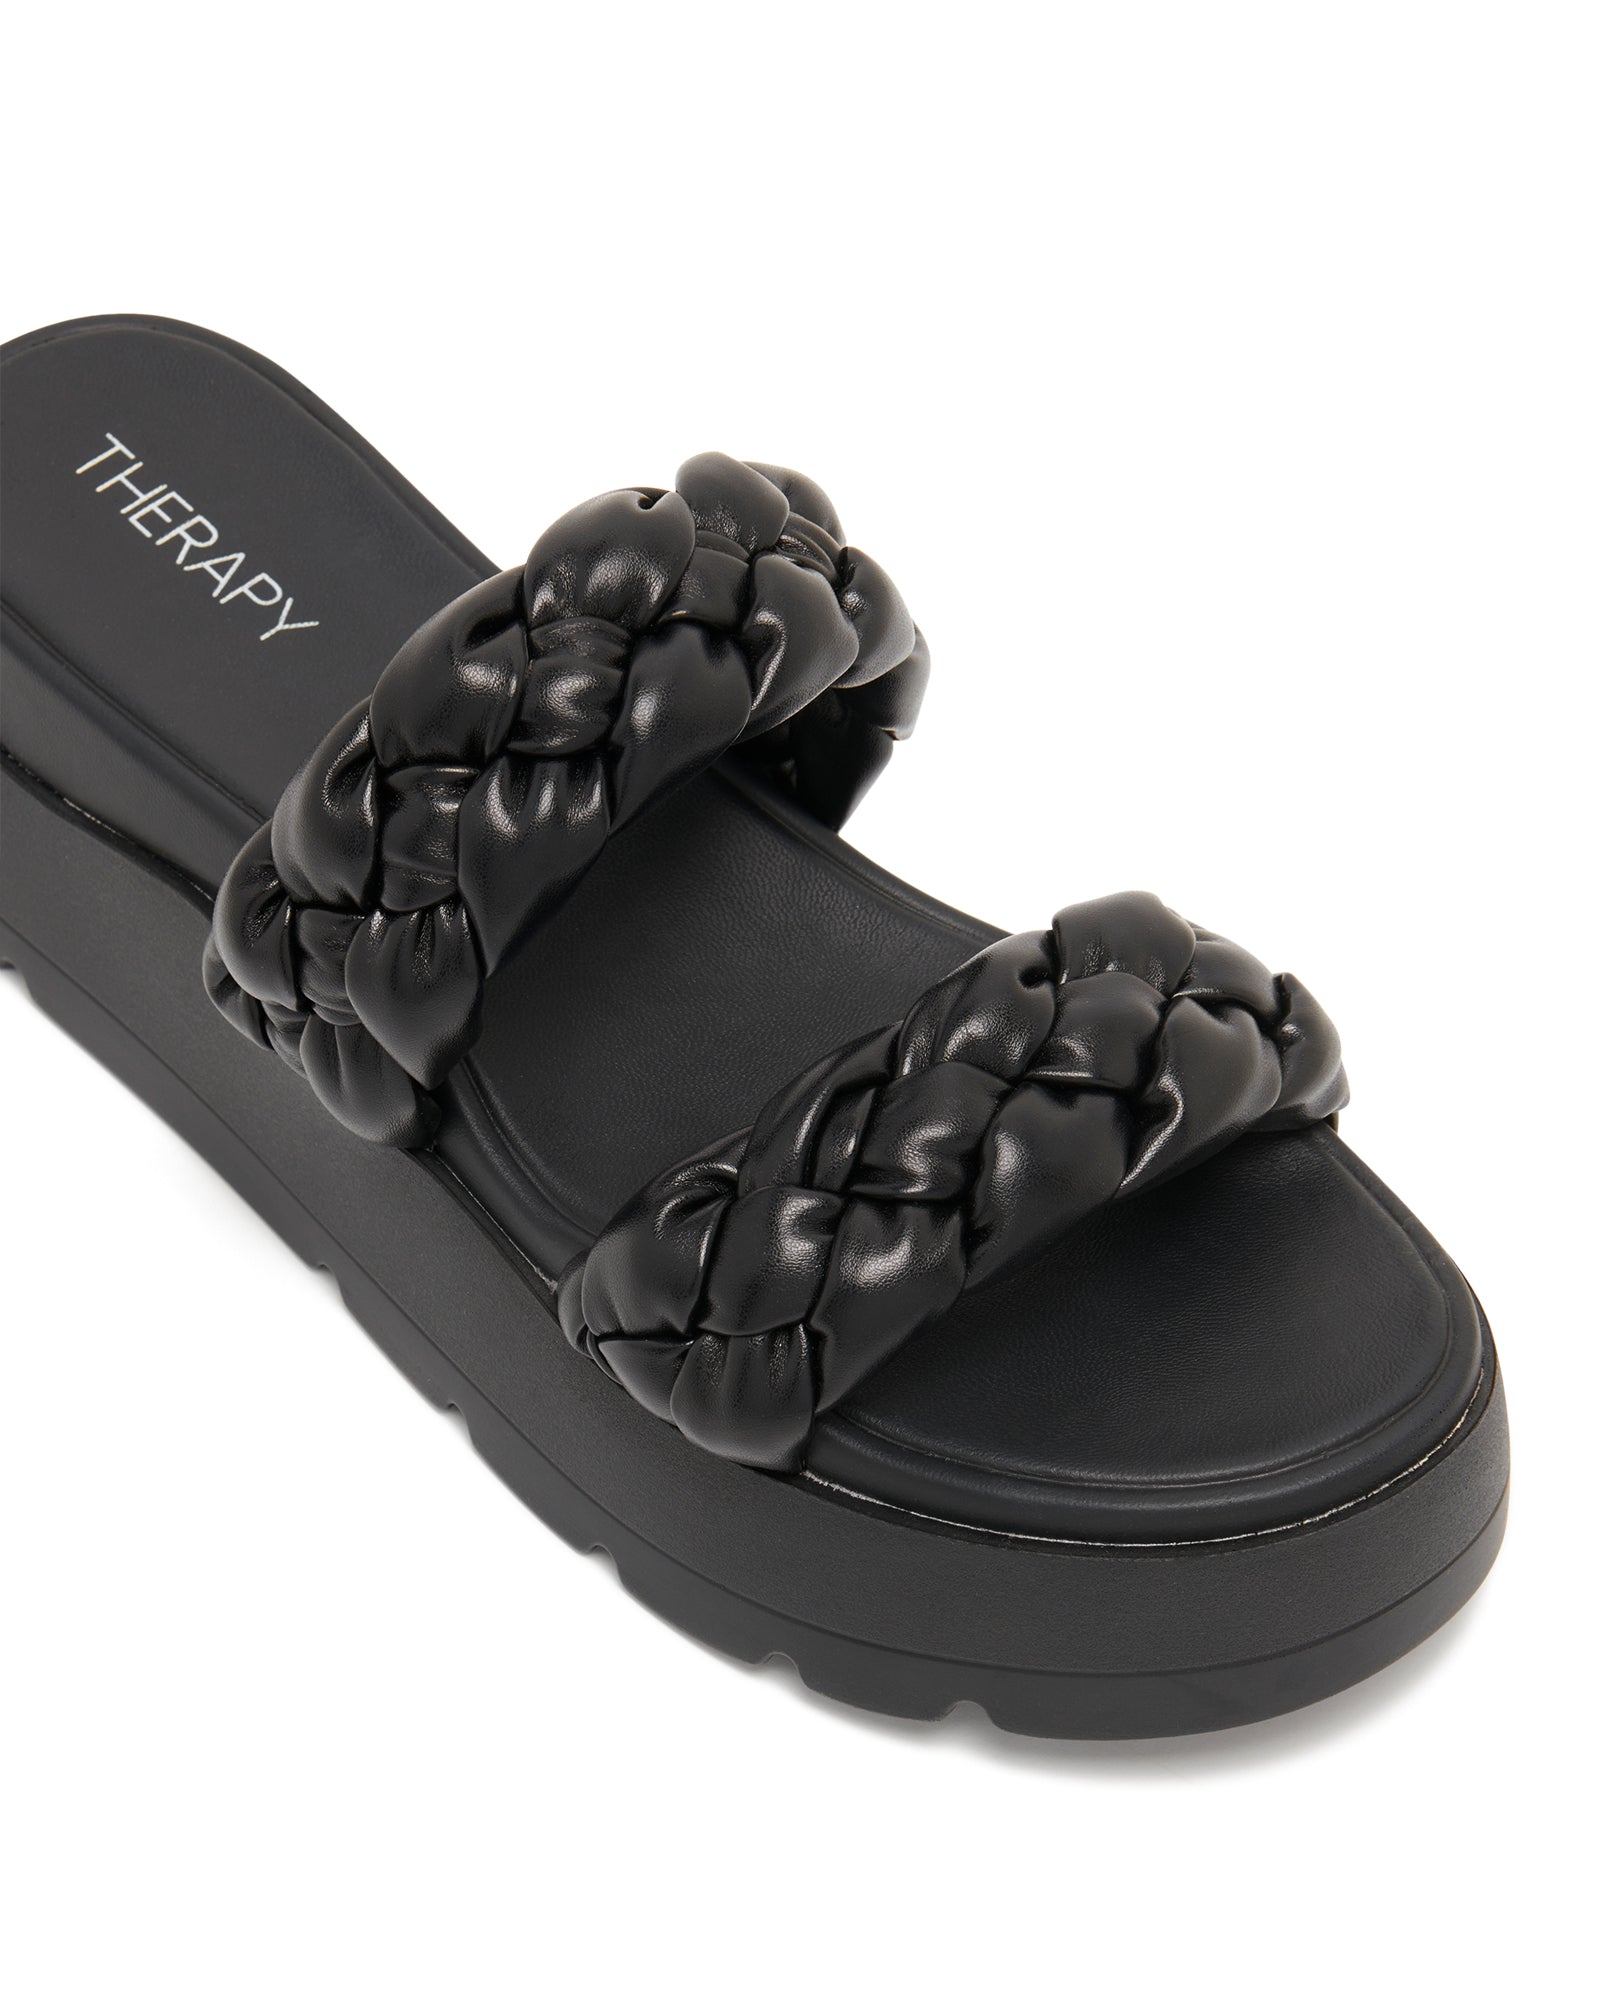 Therapy Shoes Paradise Black Smooth | Women's Sandals | Platform | Flatform